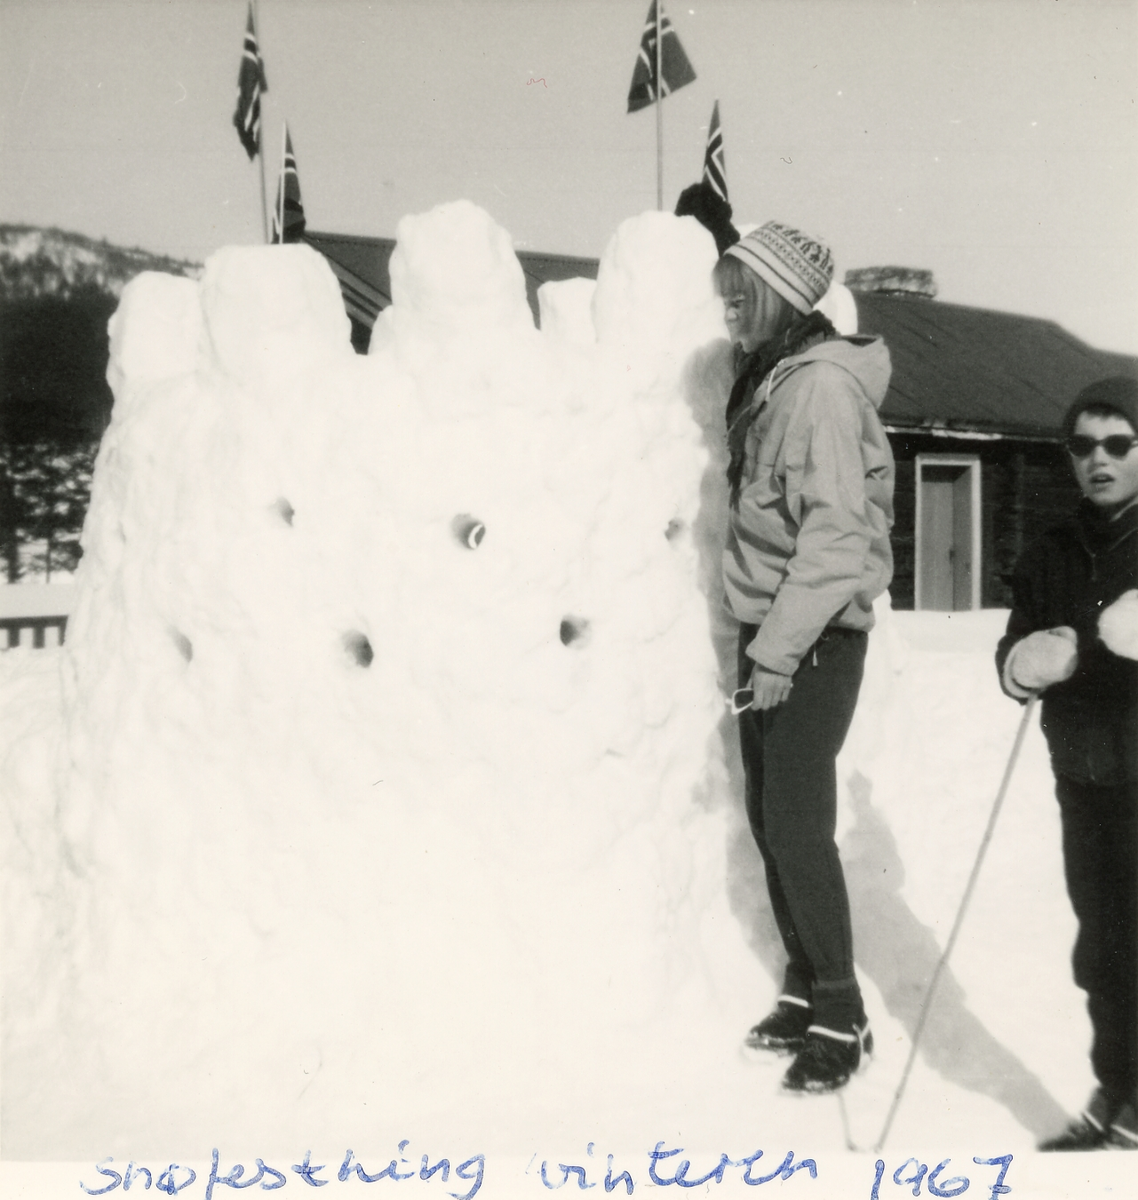 Barn har bygget snøfestning